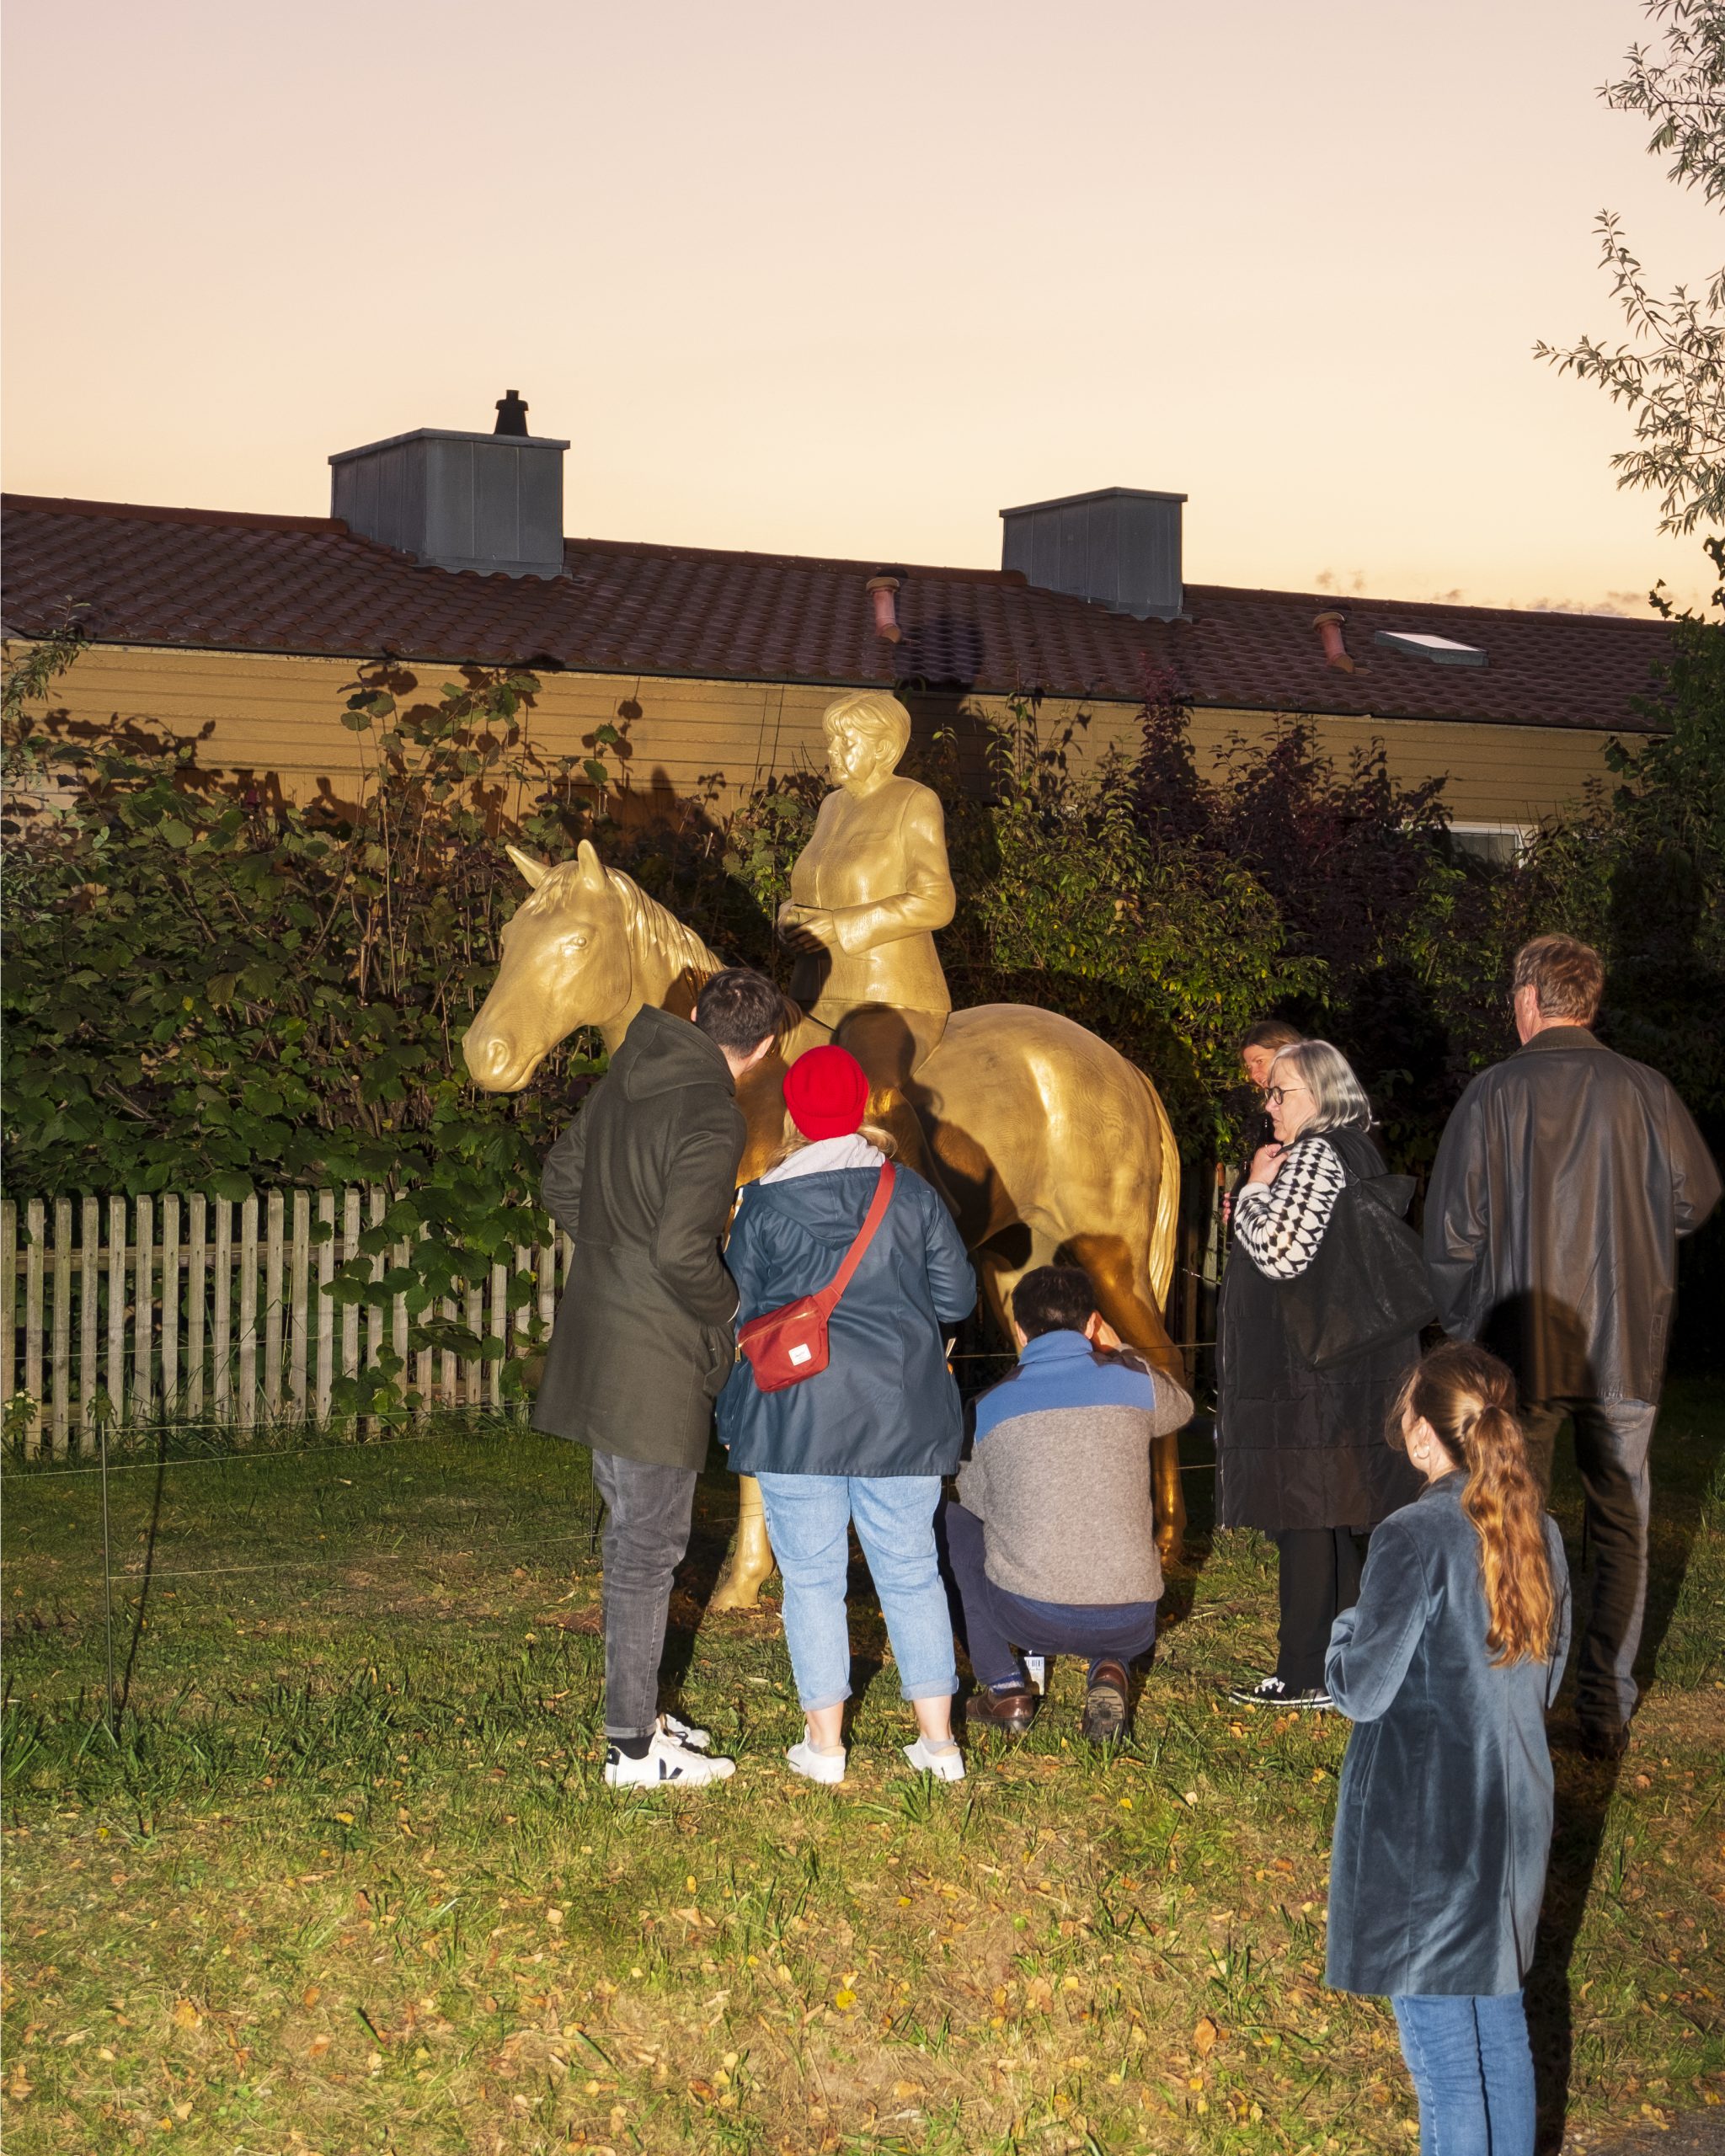 Golden equestrian Statue of Angela Merkel with surrounding visitors